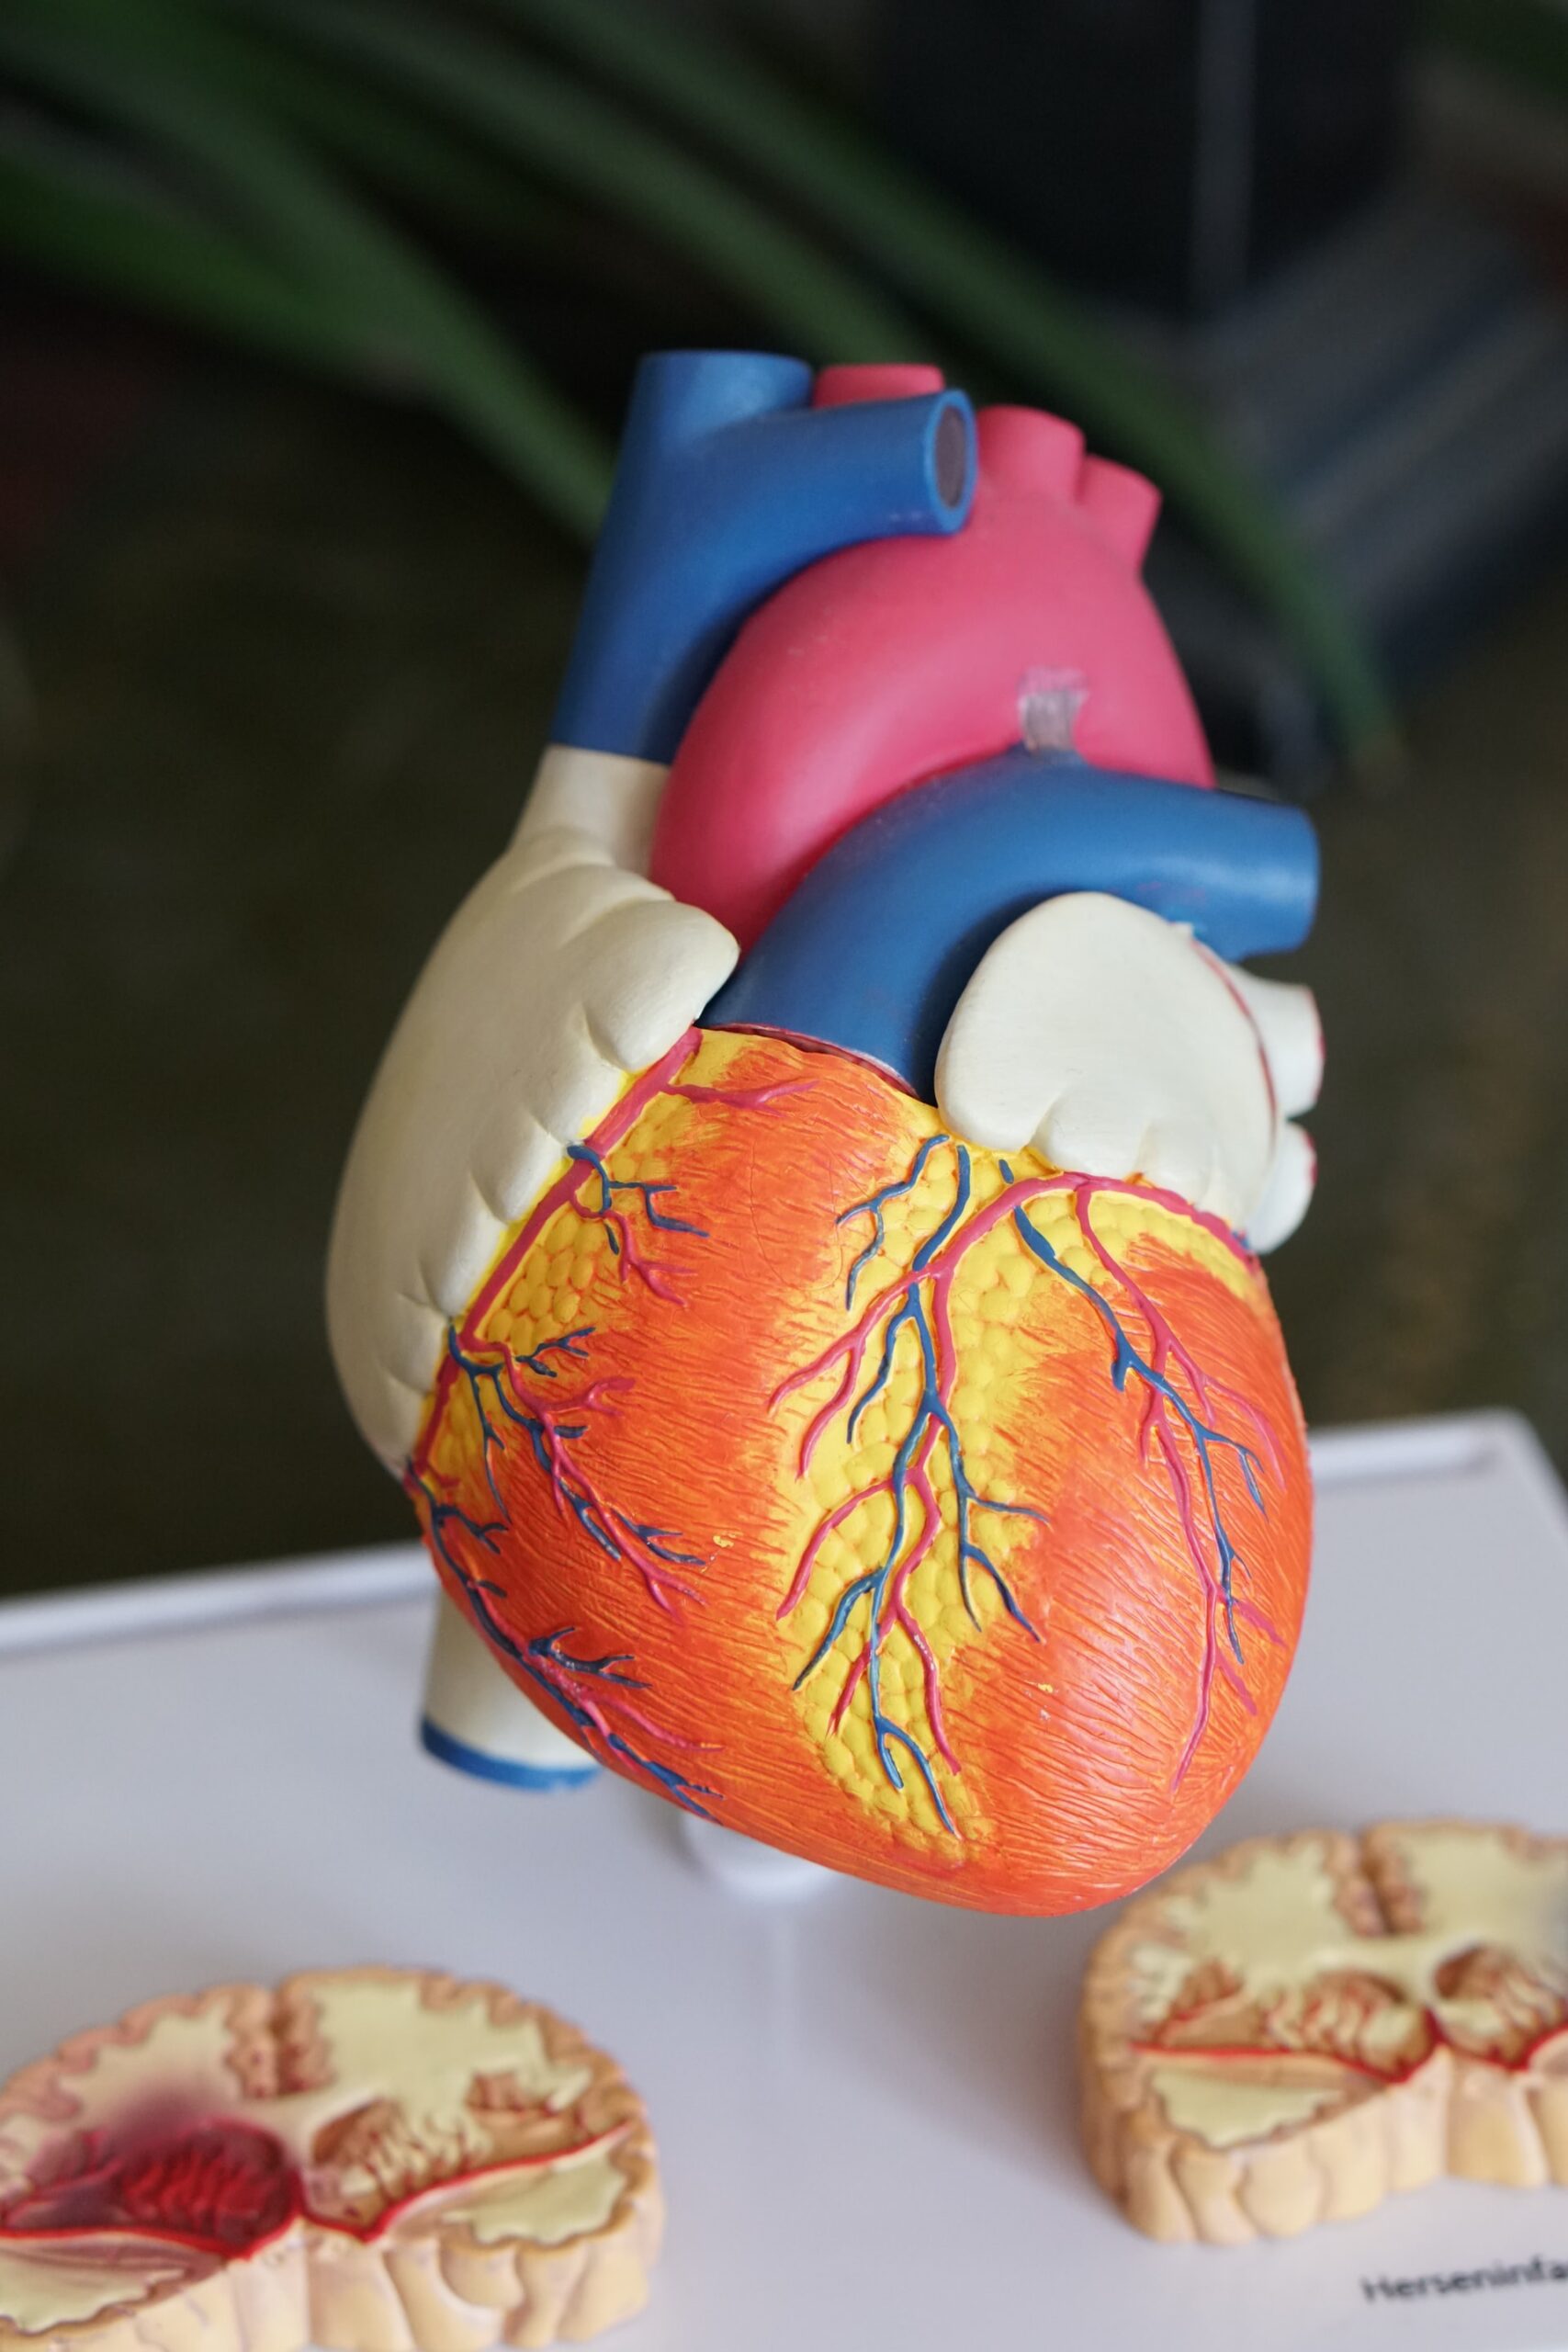 8 Weird Facts about the Human Heart